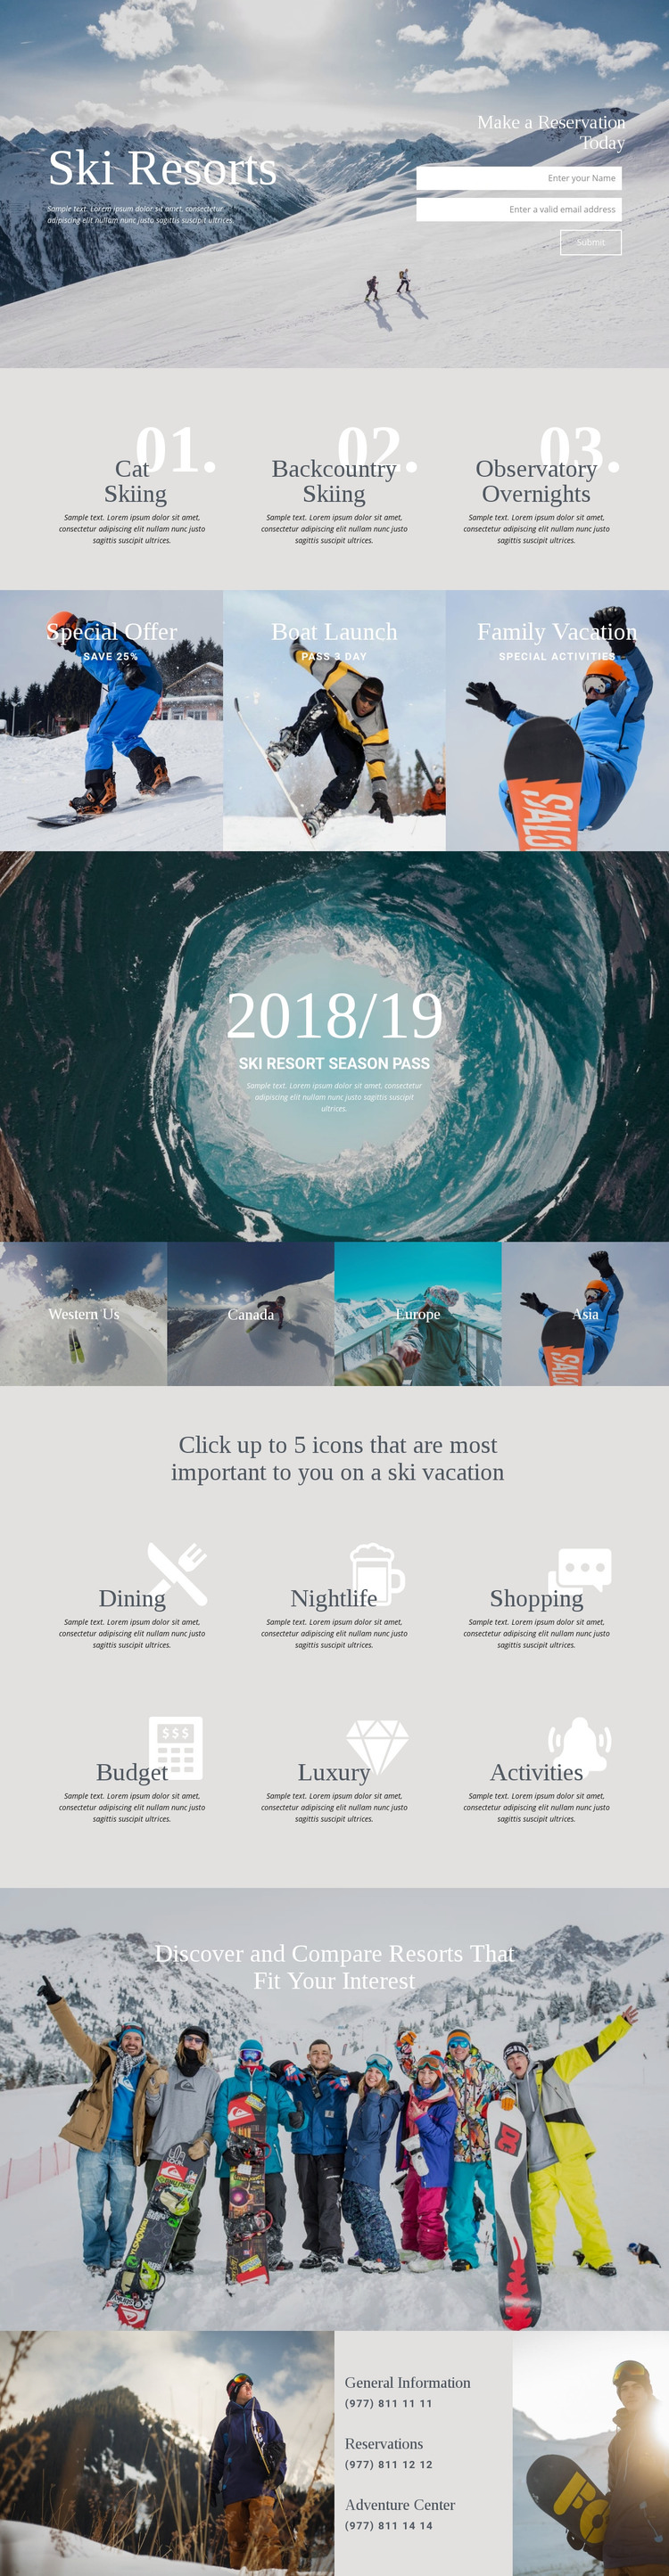 Ski Resorts Homepage Design